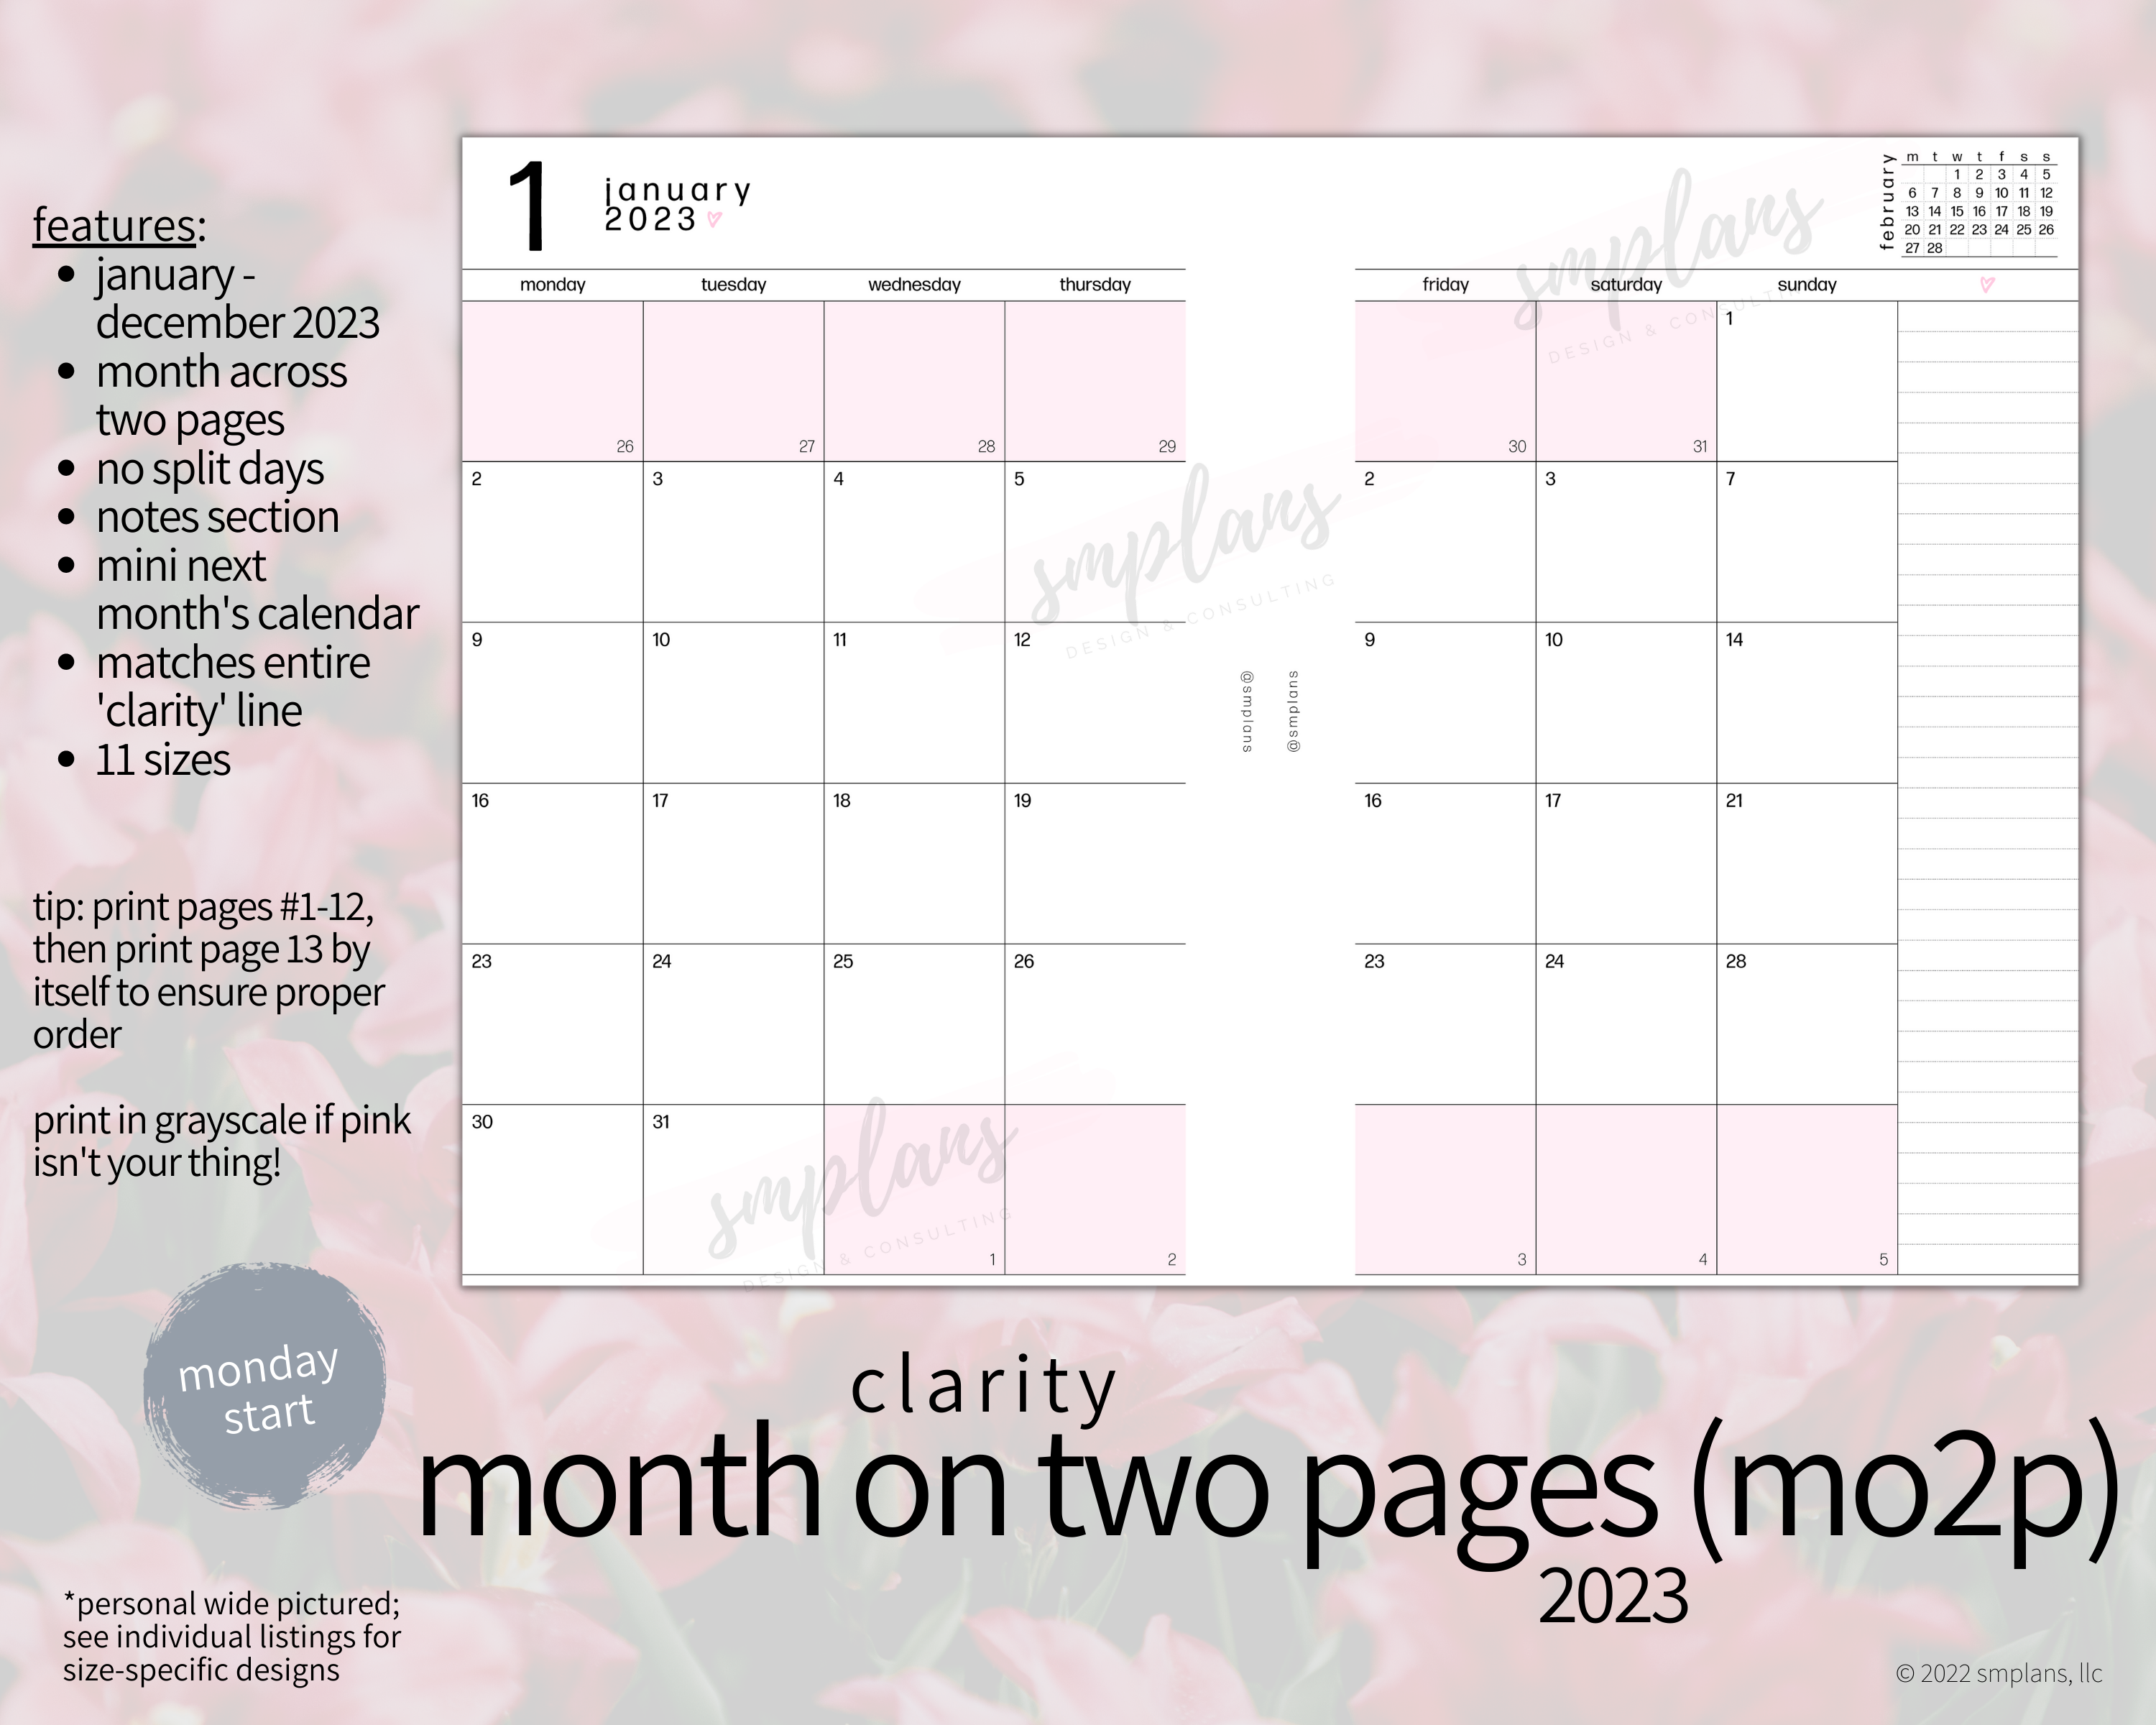 Find 2018 Calendar Refills: FIT LOUIS VUITTON PM & MM 6 Ring AGENDA COVER